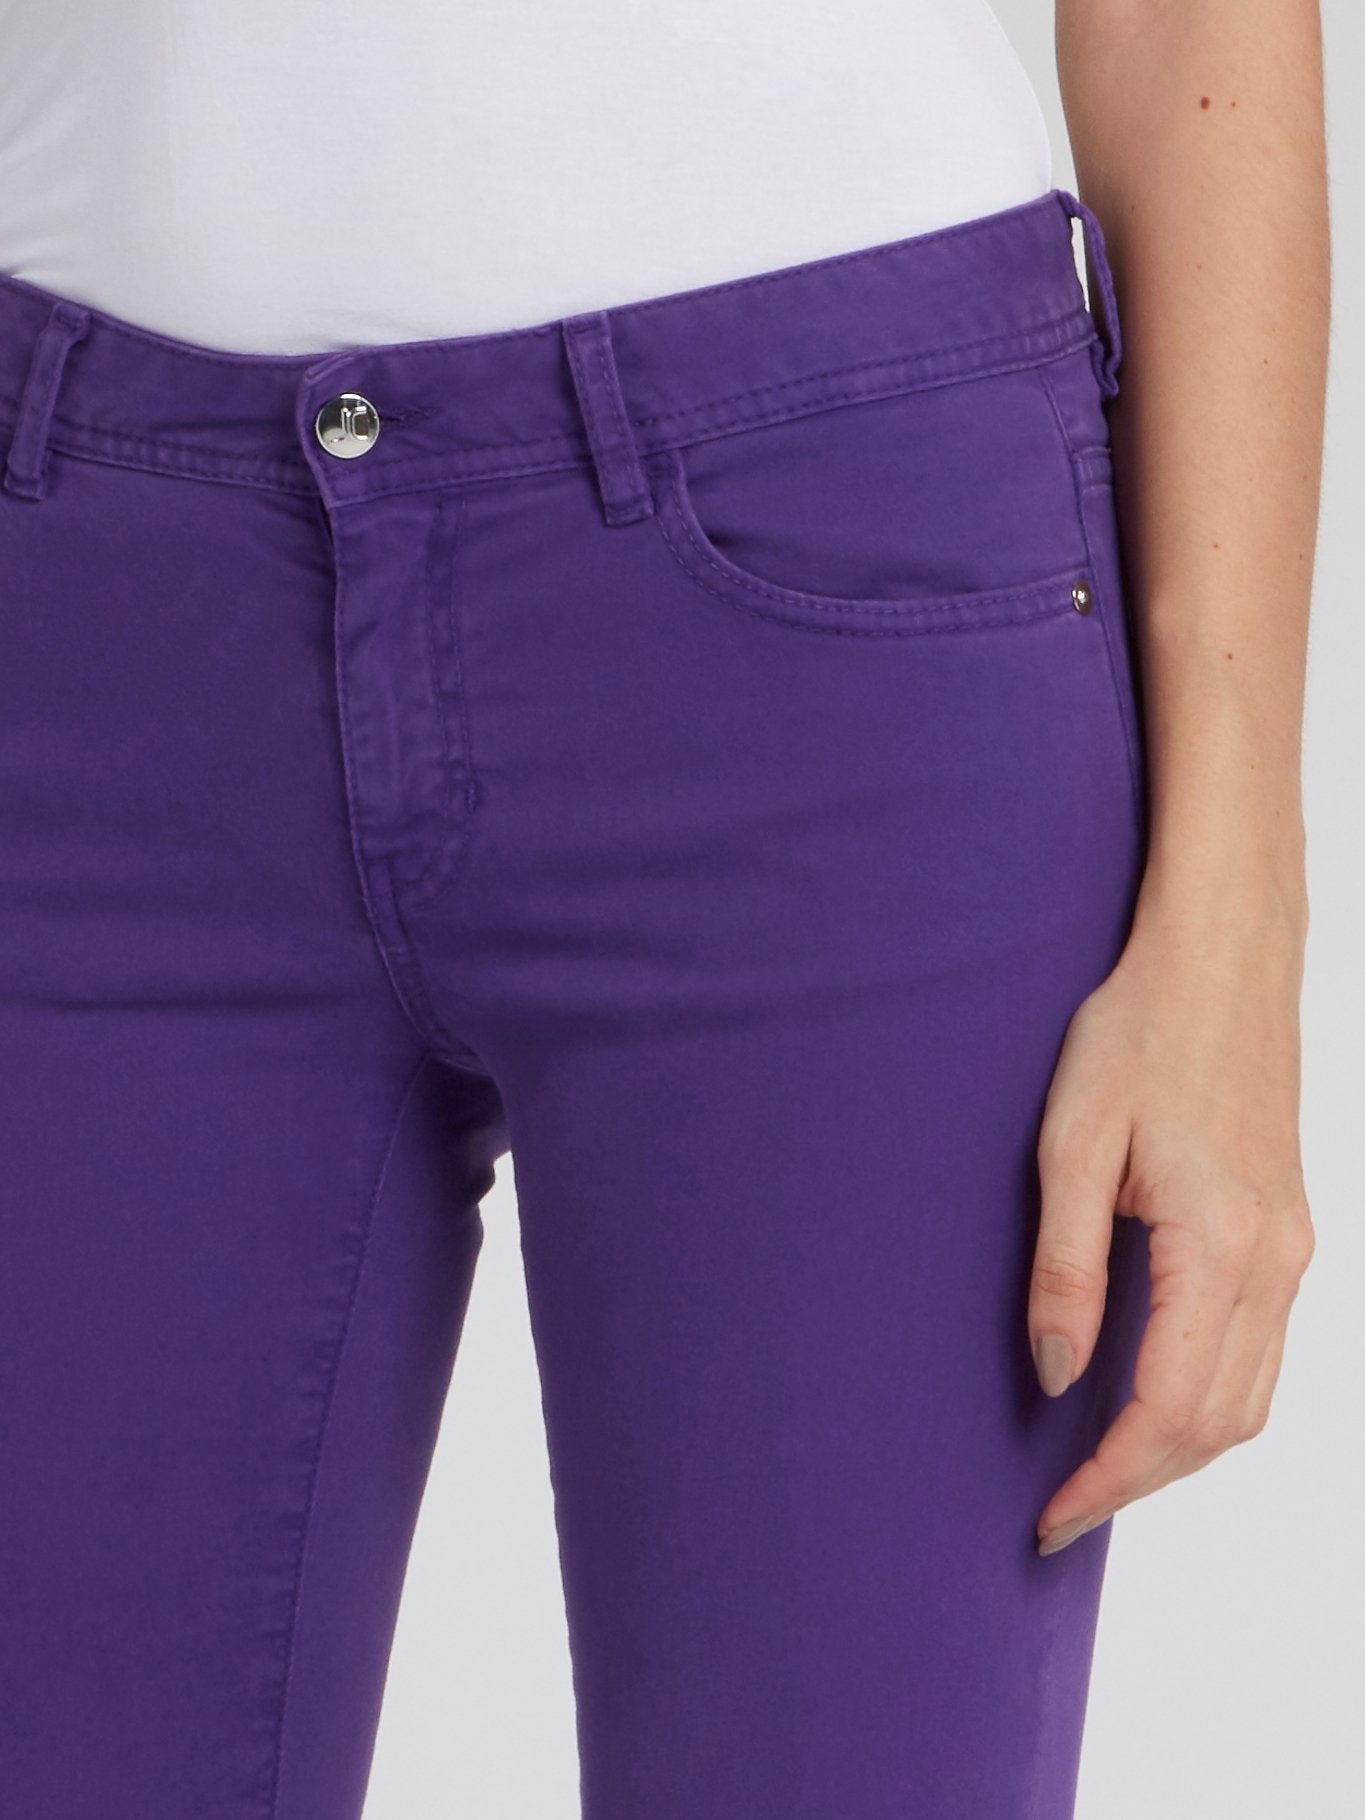 Purple Skinny Capri Pants